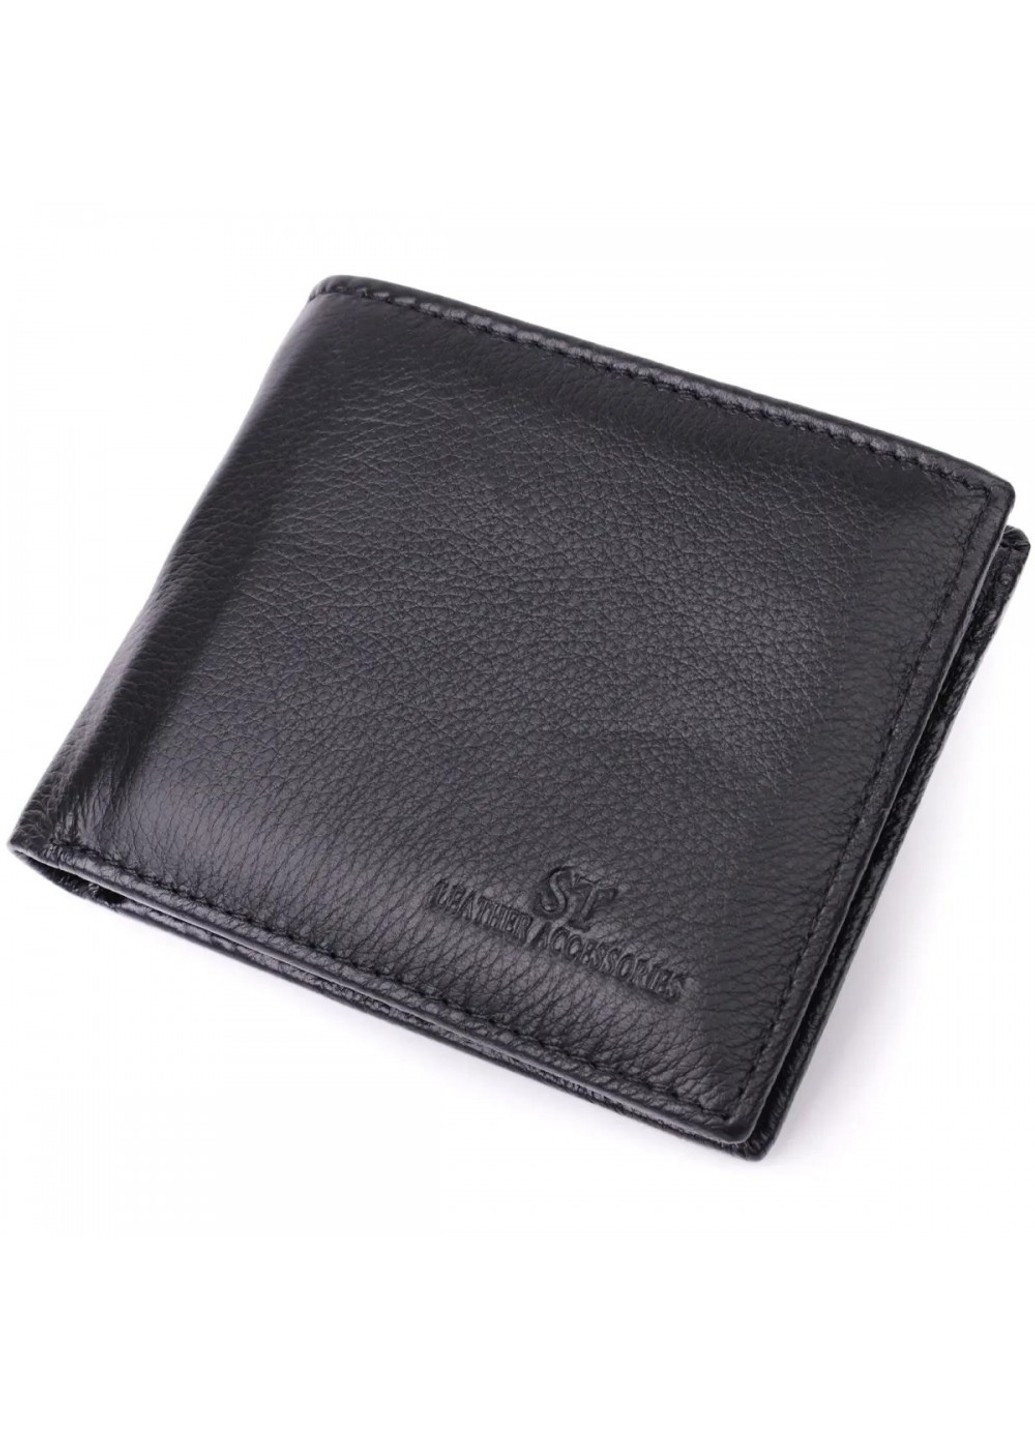 Мужской кожаный кошелек-зажим ST Leather 22481 ST Leather Accessories (277925862)